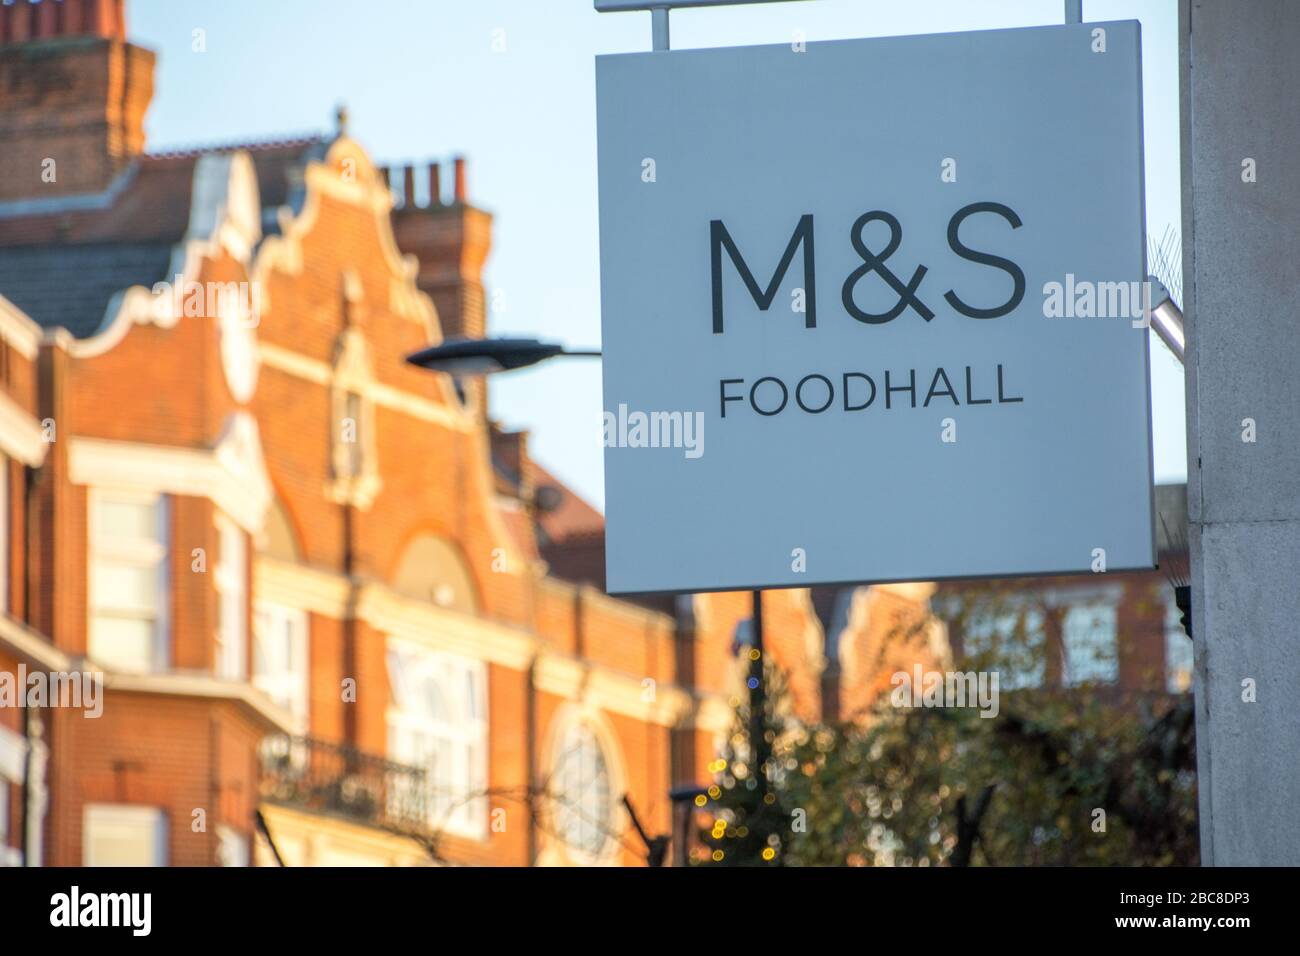 Marks & Spencer Foodhall, British supermarket and brand- exterior logo / signage- London Stock Photo